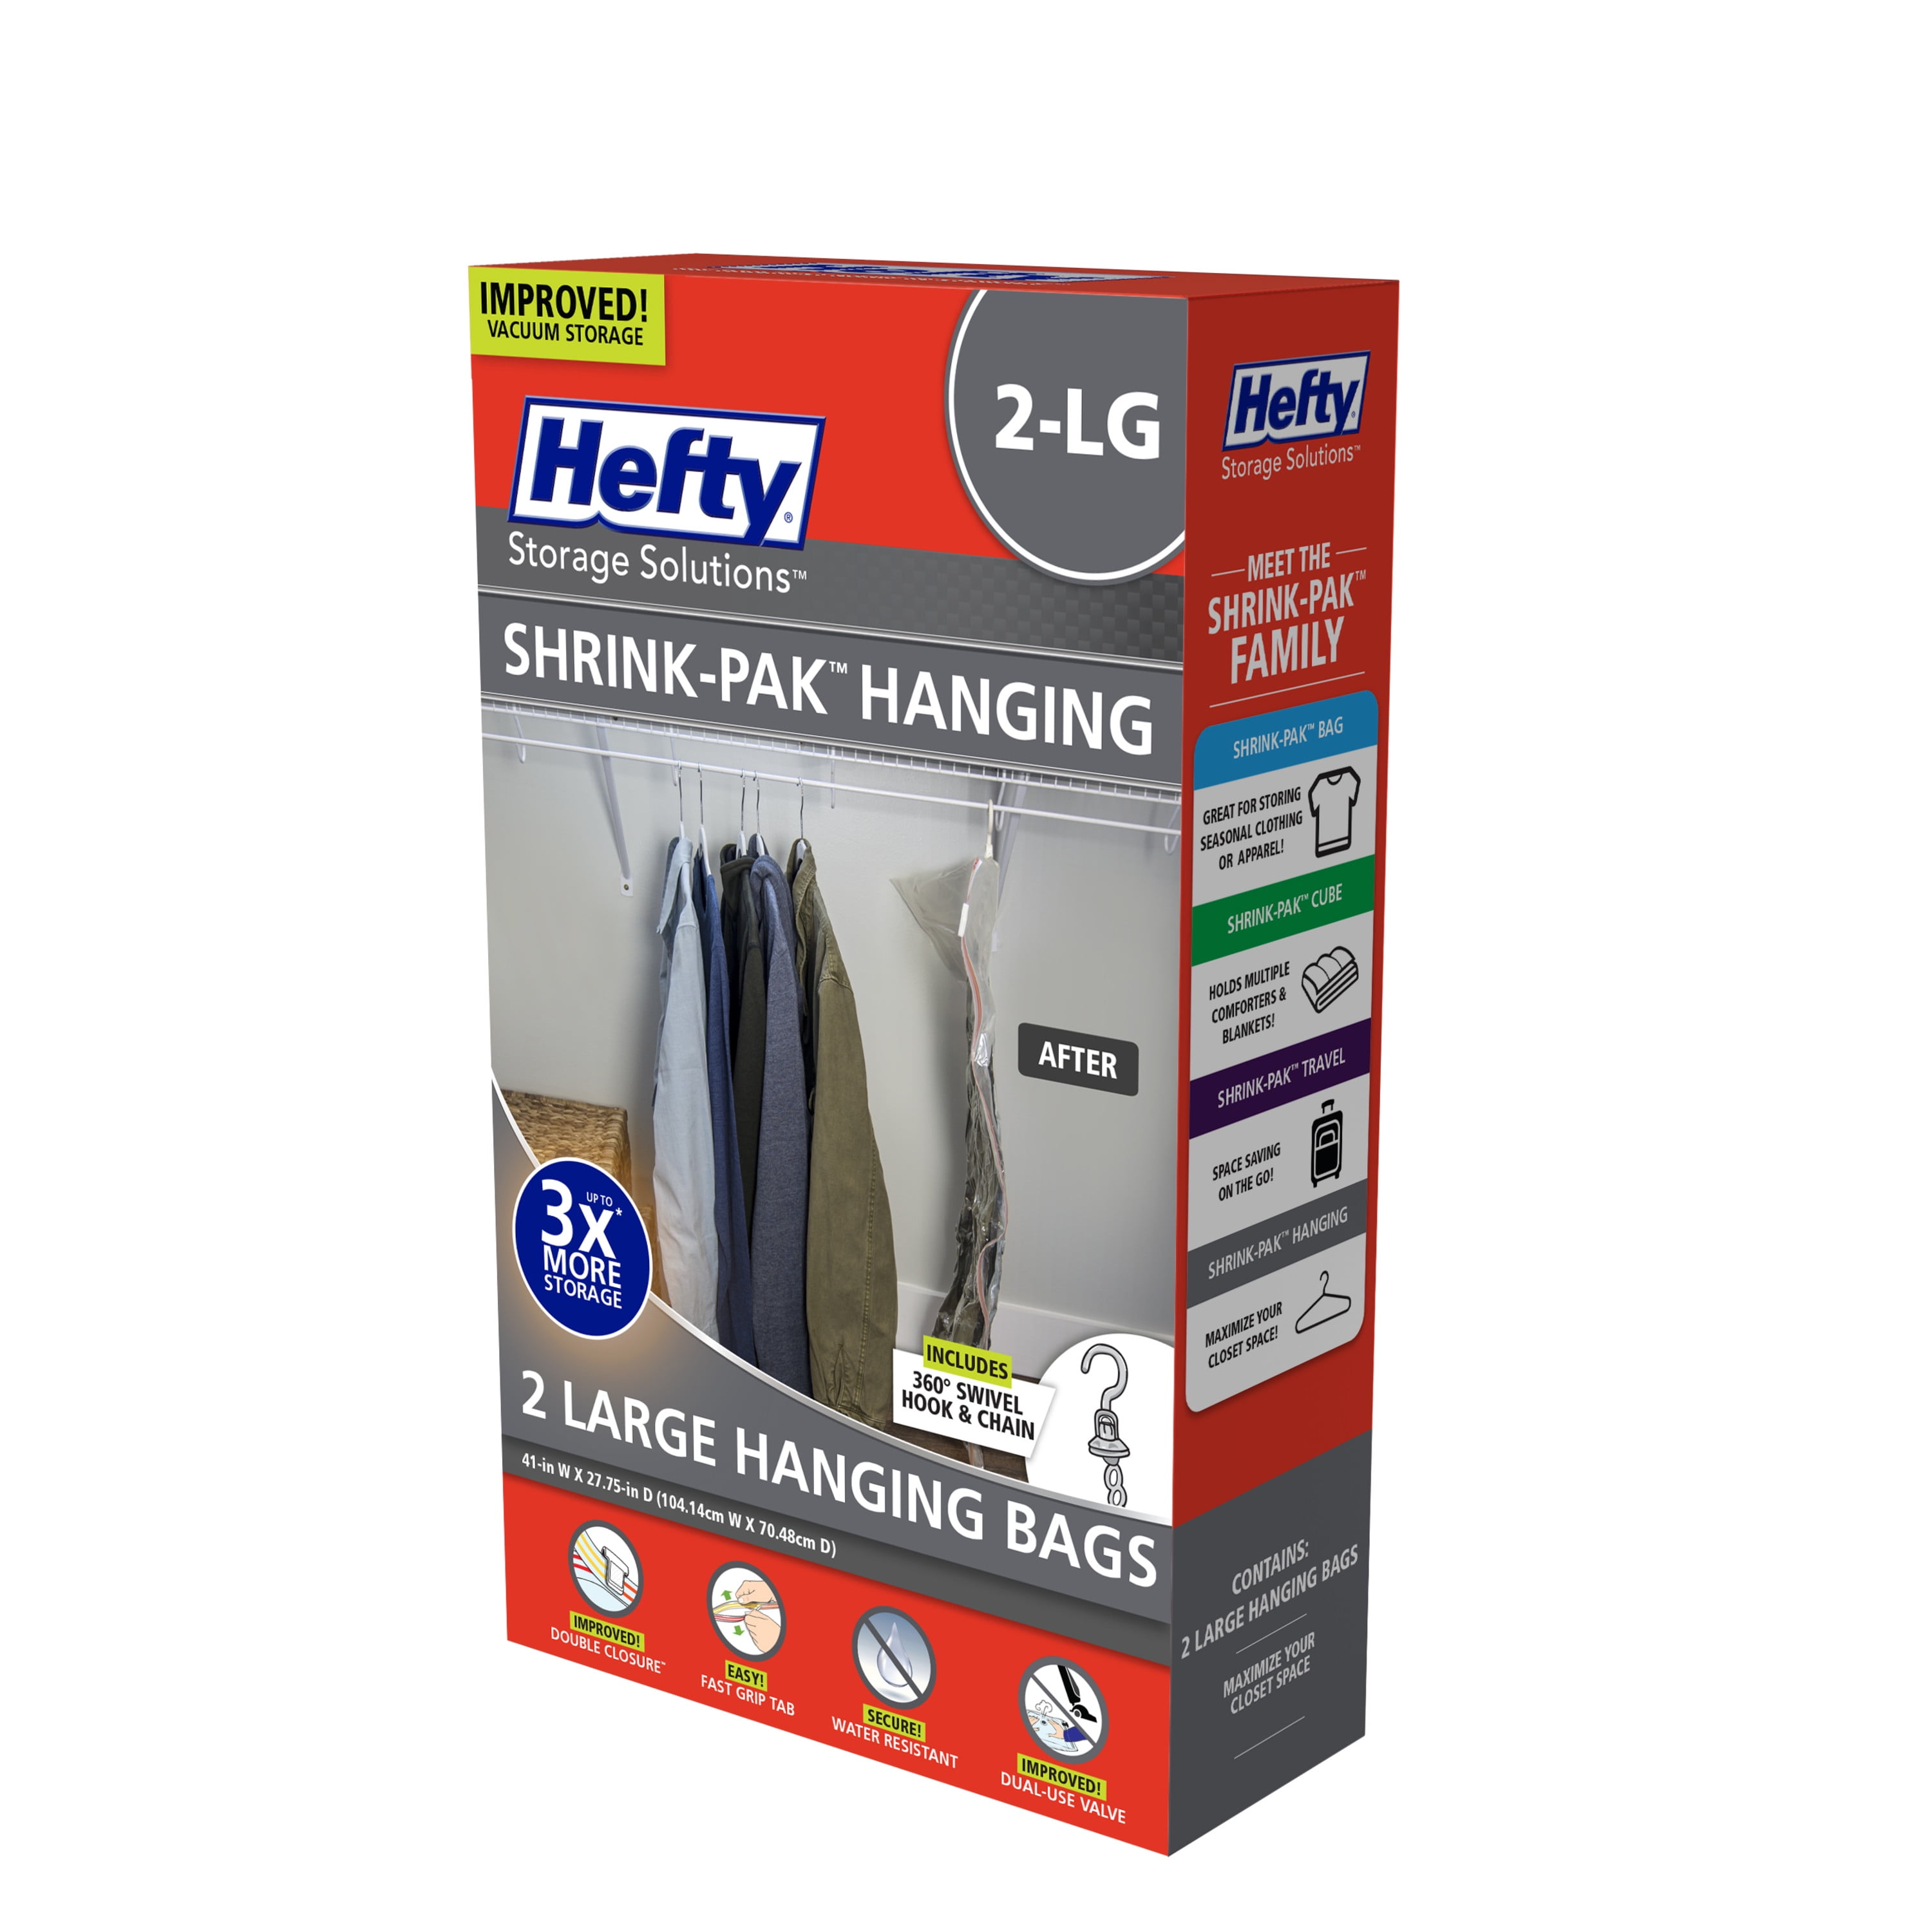 Hefty SHRINK-PAK 2 Large Hanging Bags, Vacuum Compression Storage